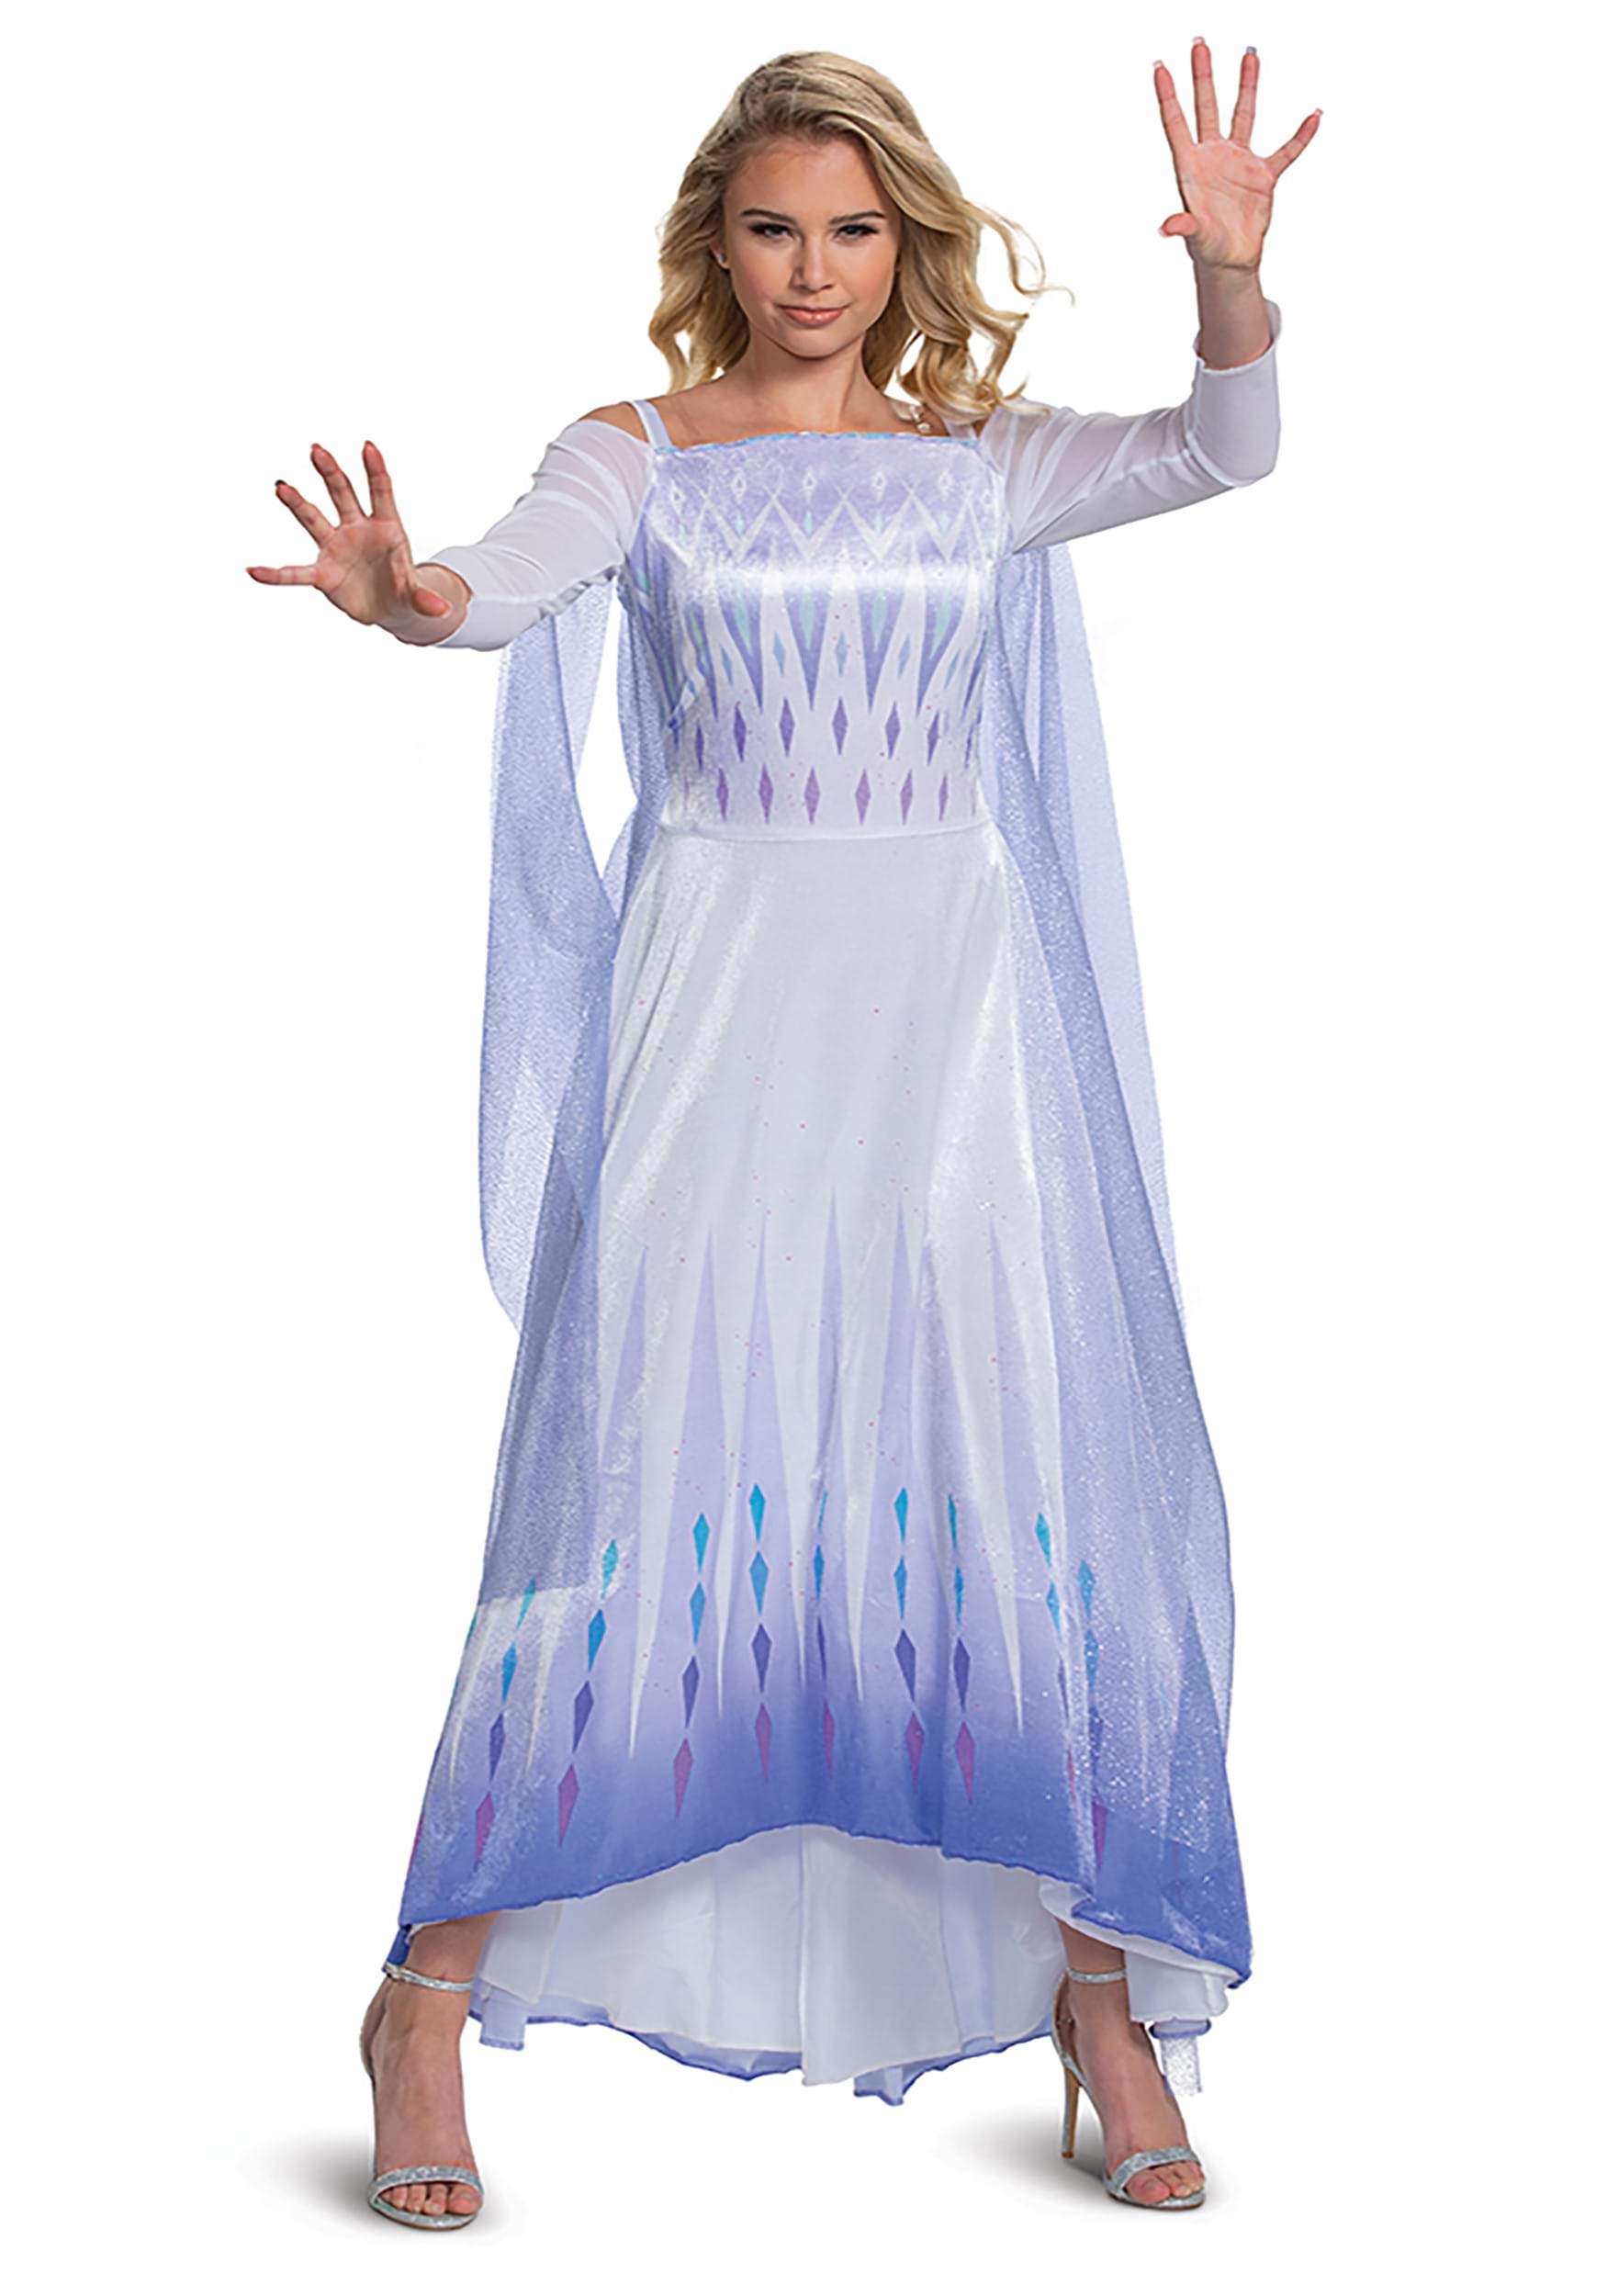 XS S M L Princess Elsa Costume Dress Snow Queen Deluxe Disney Frozen Fast 